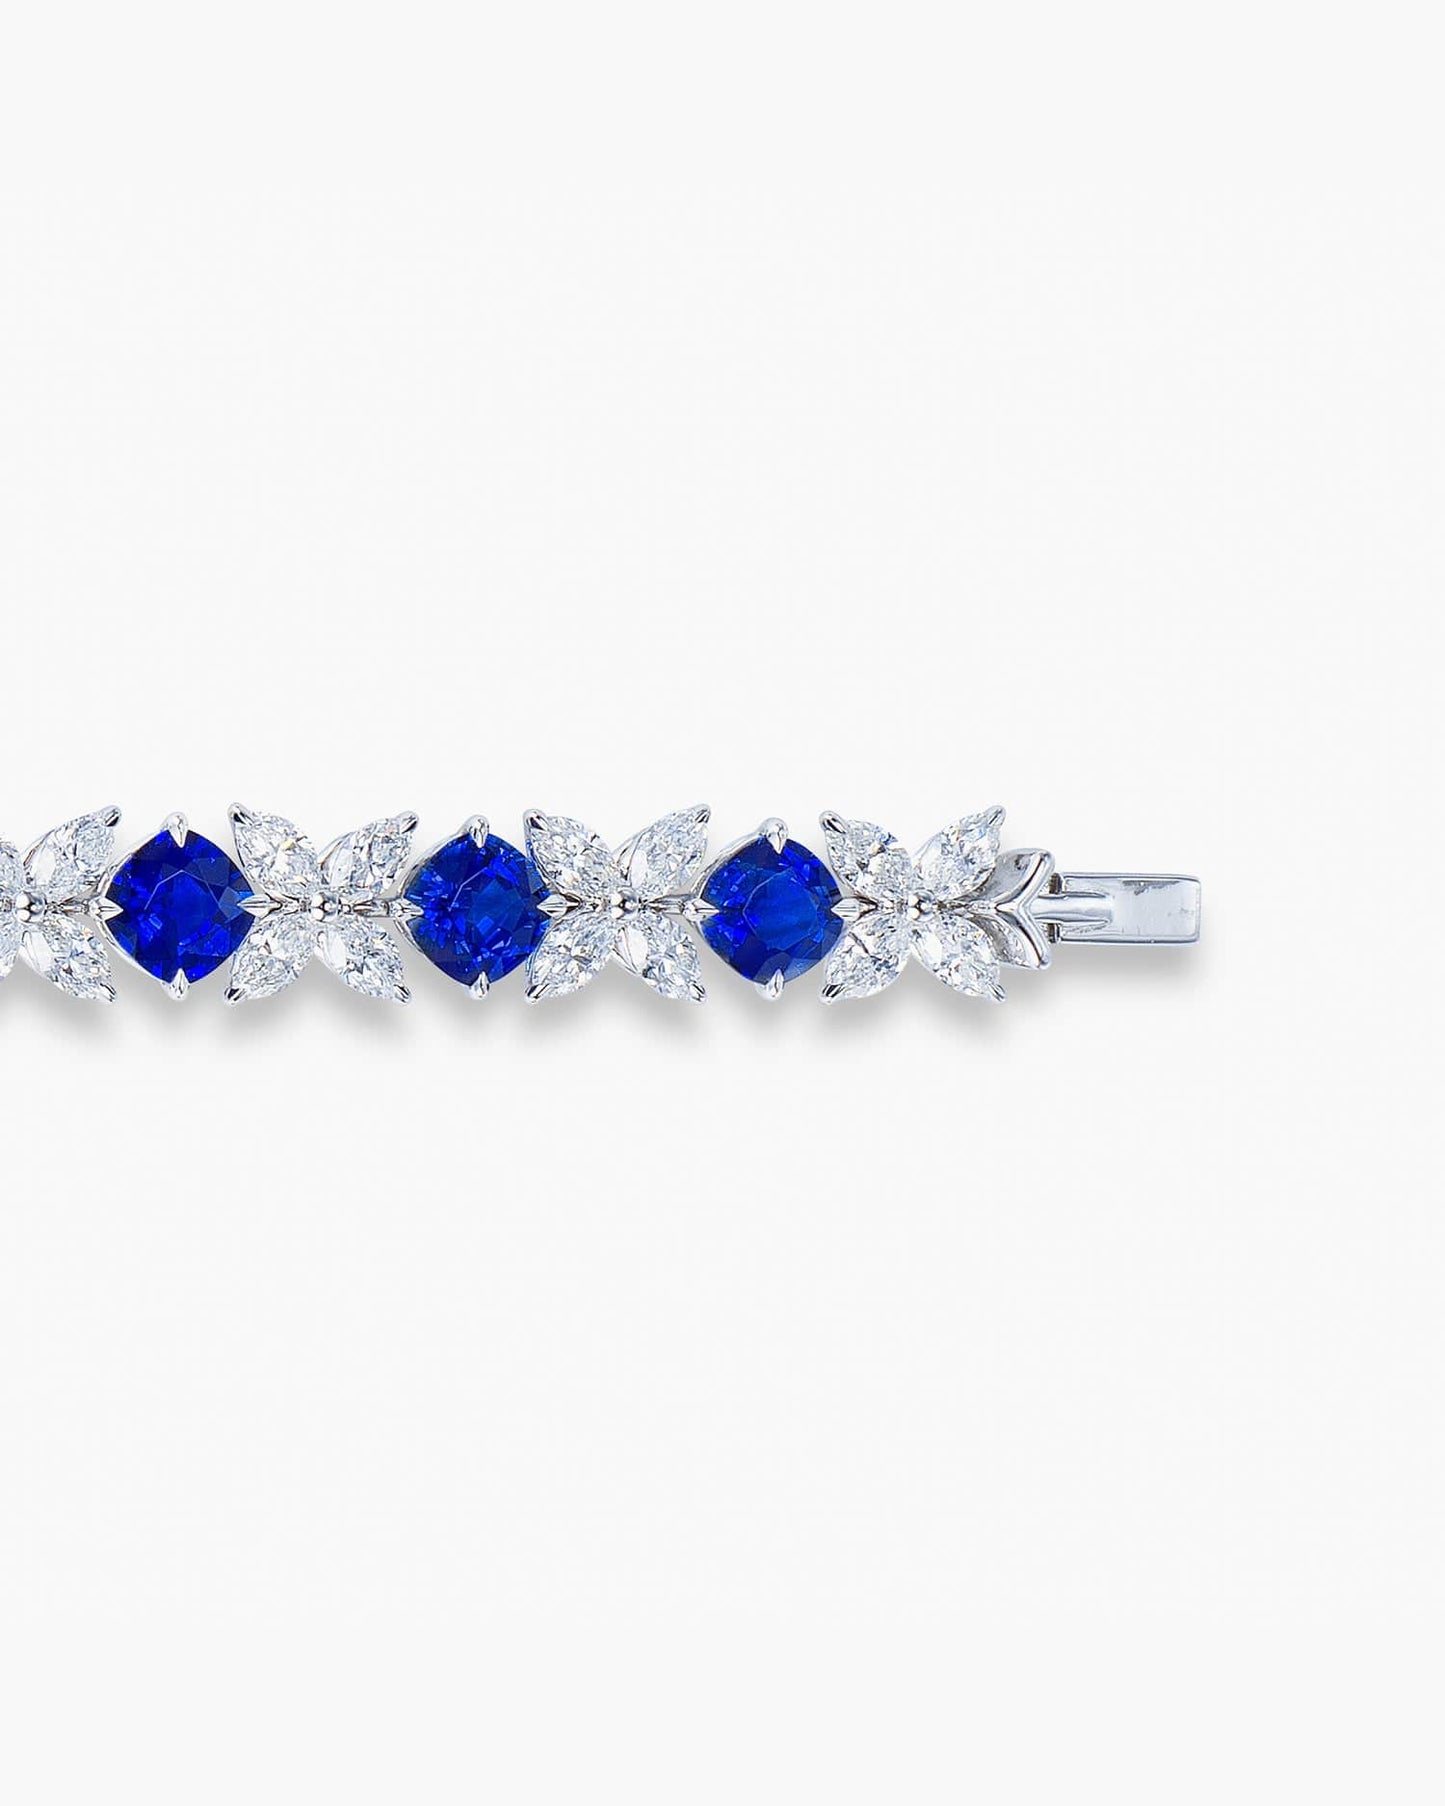 Cushion Cut Sapphire and Diamond Bracelet (1.18 carat)